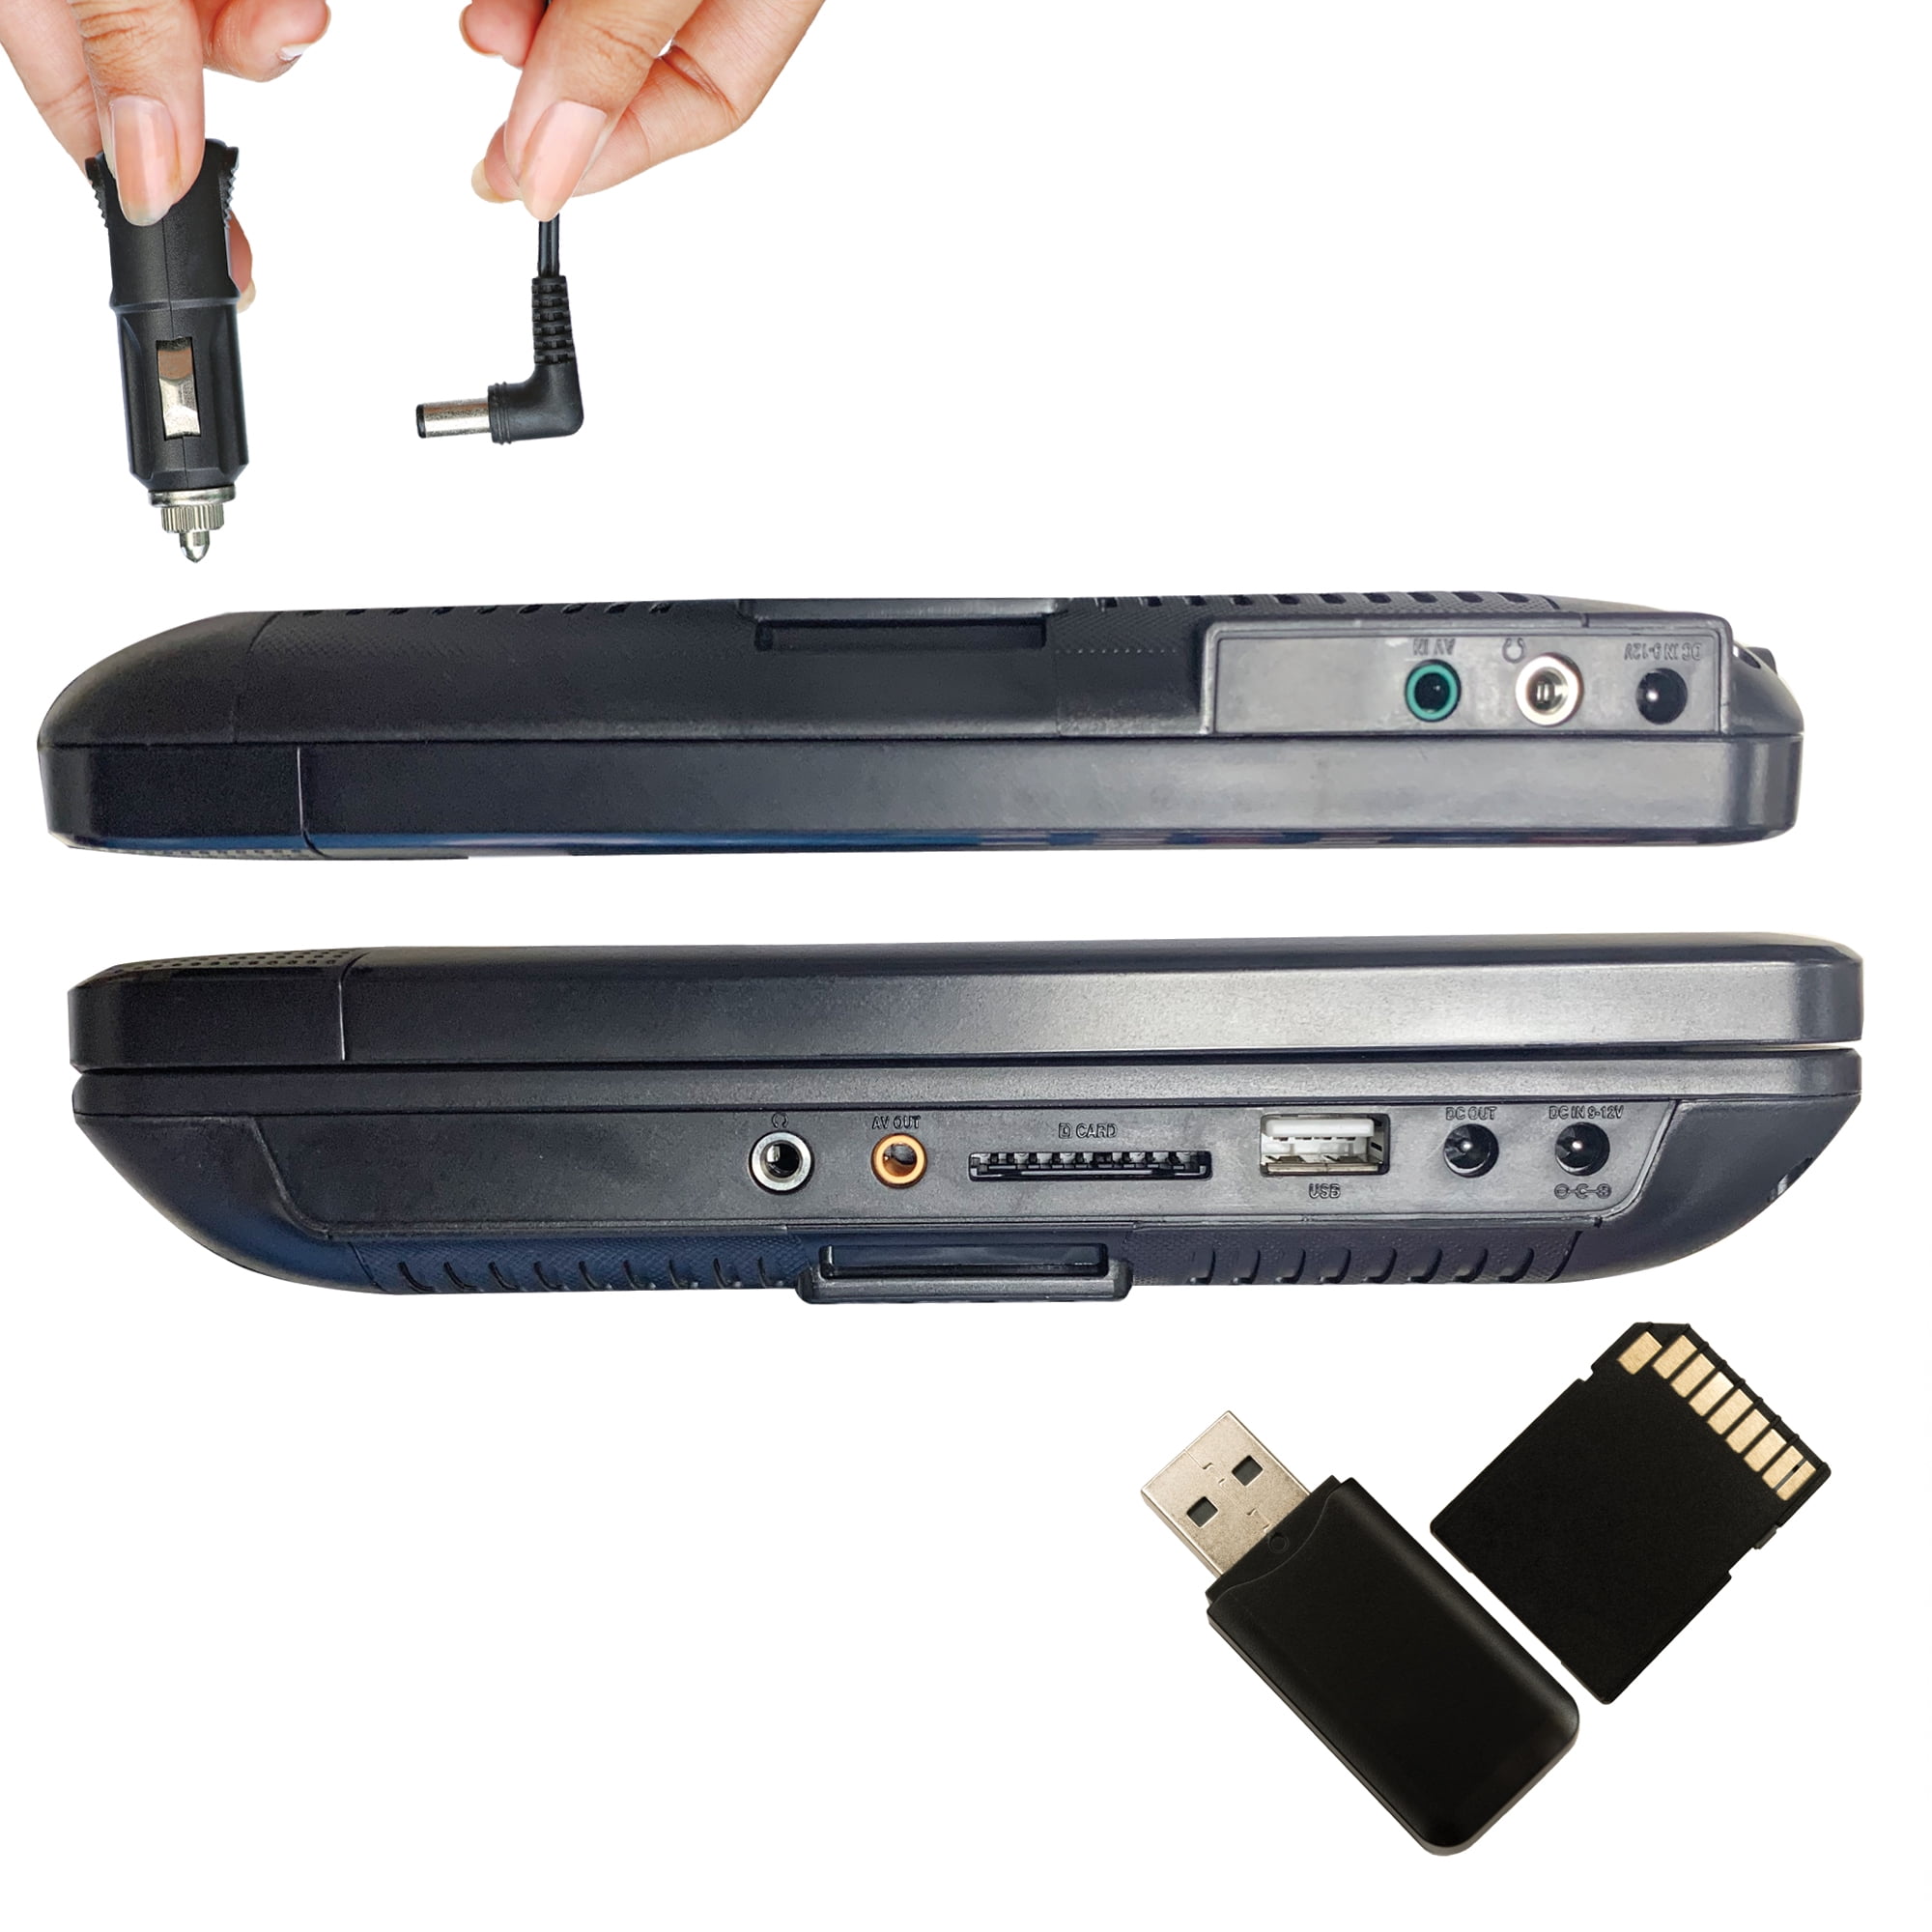 Laser 10-inch Portable DVD Player